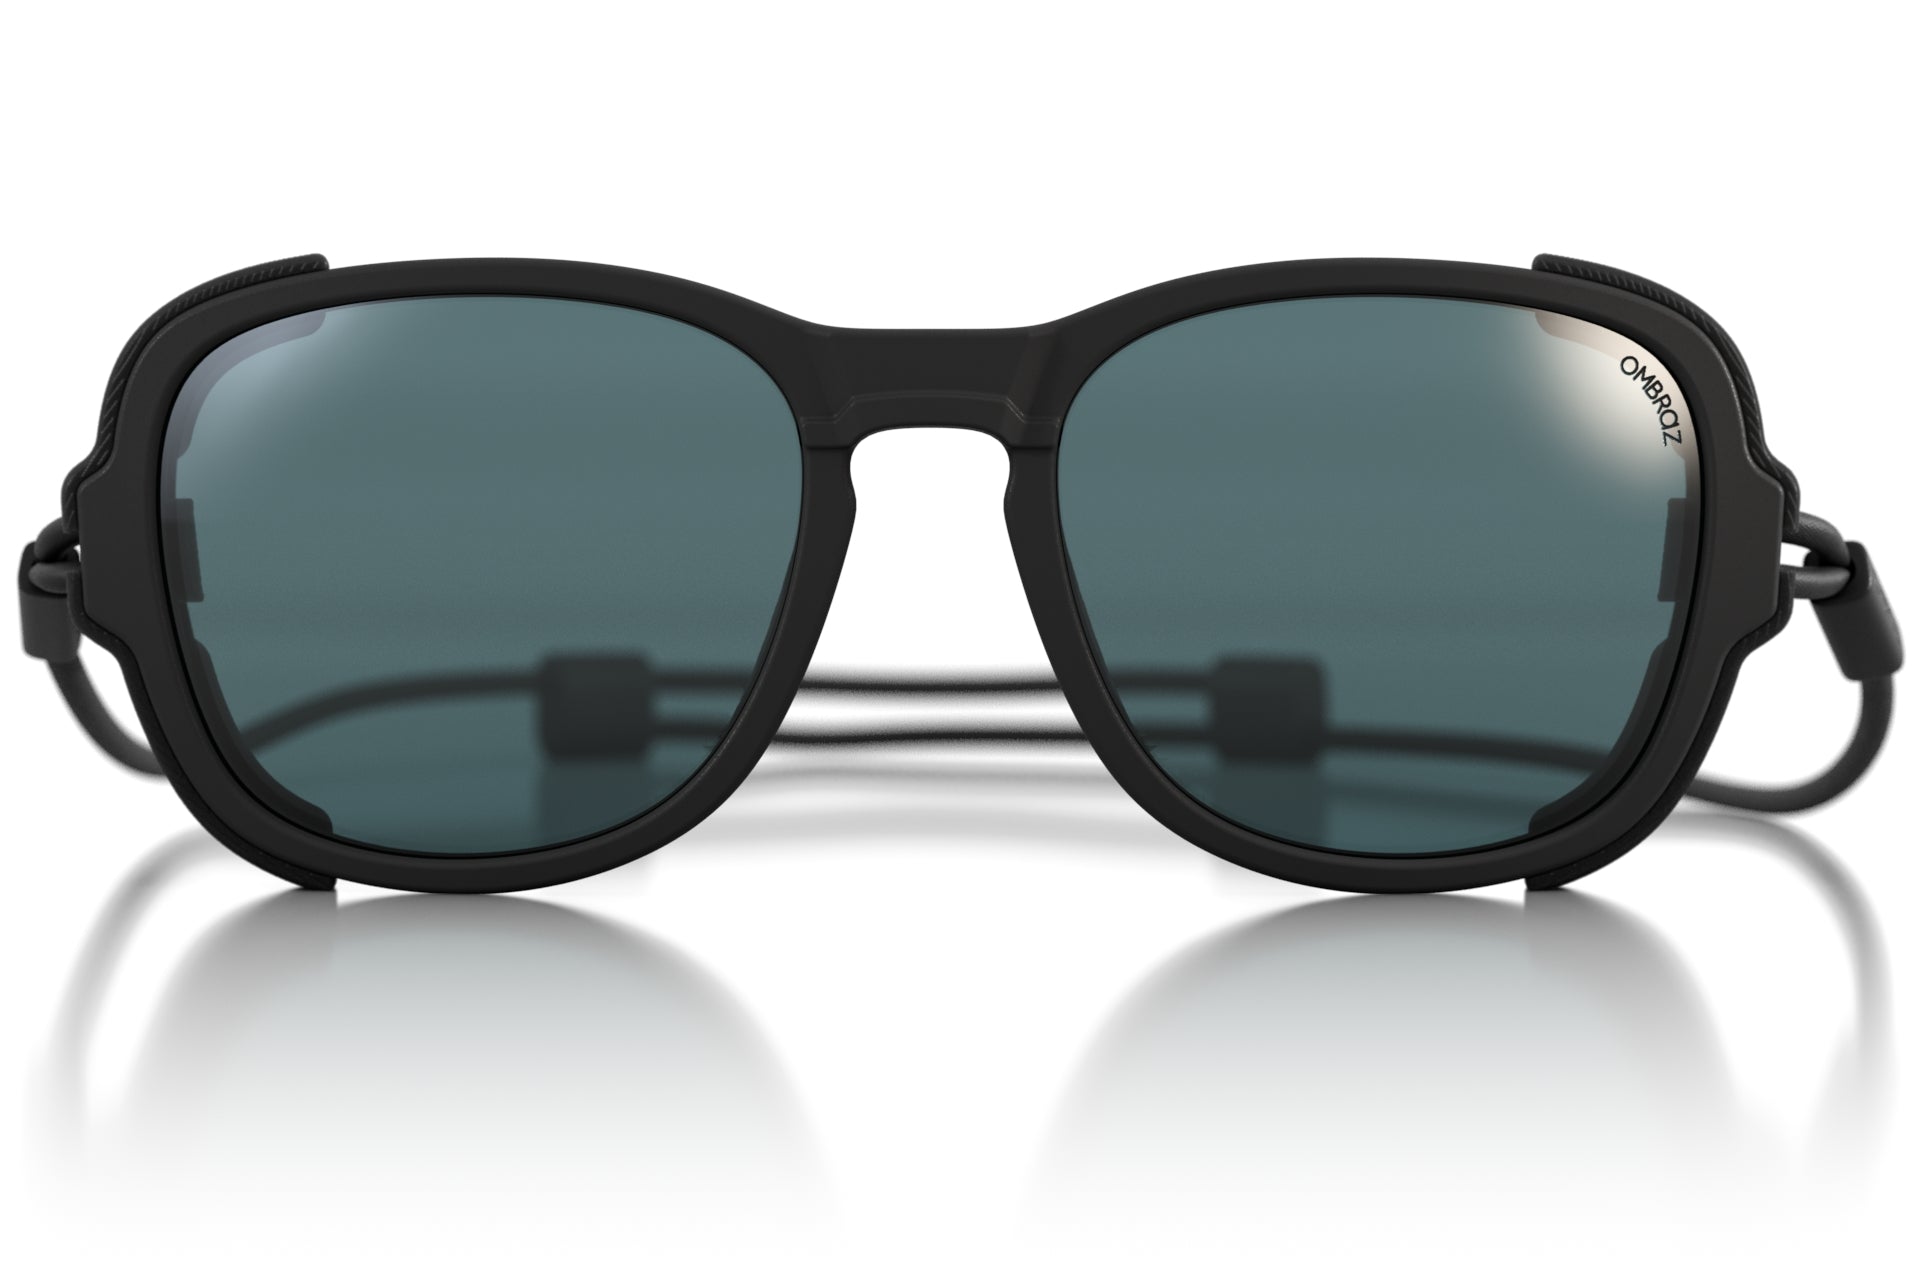 Tortoise_grey Ombraz unisex tortoise grey classic armless sunglasses with strap